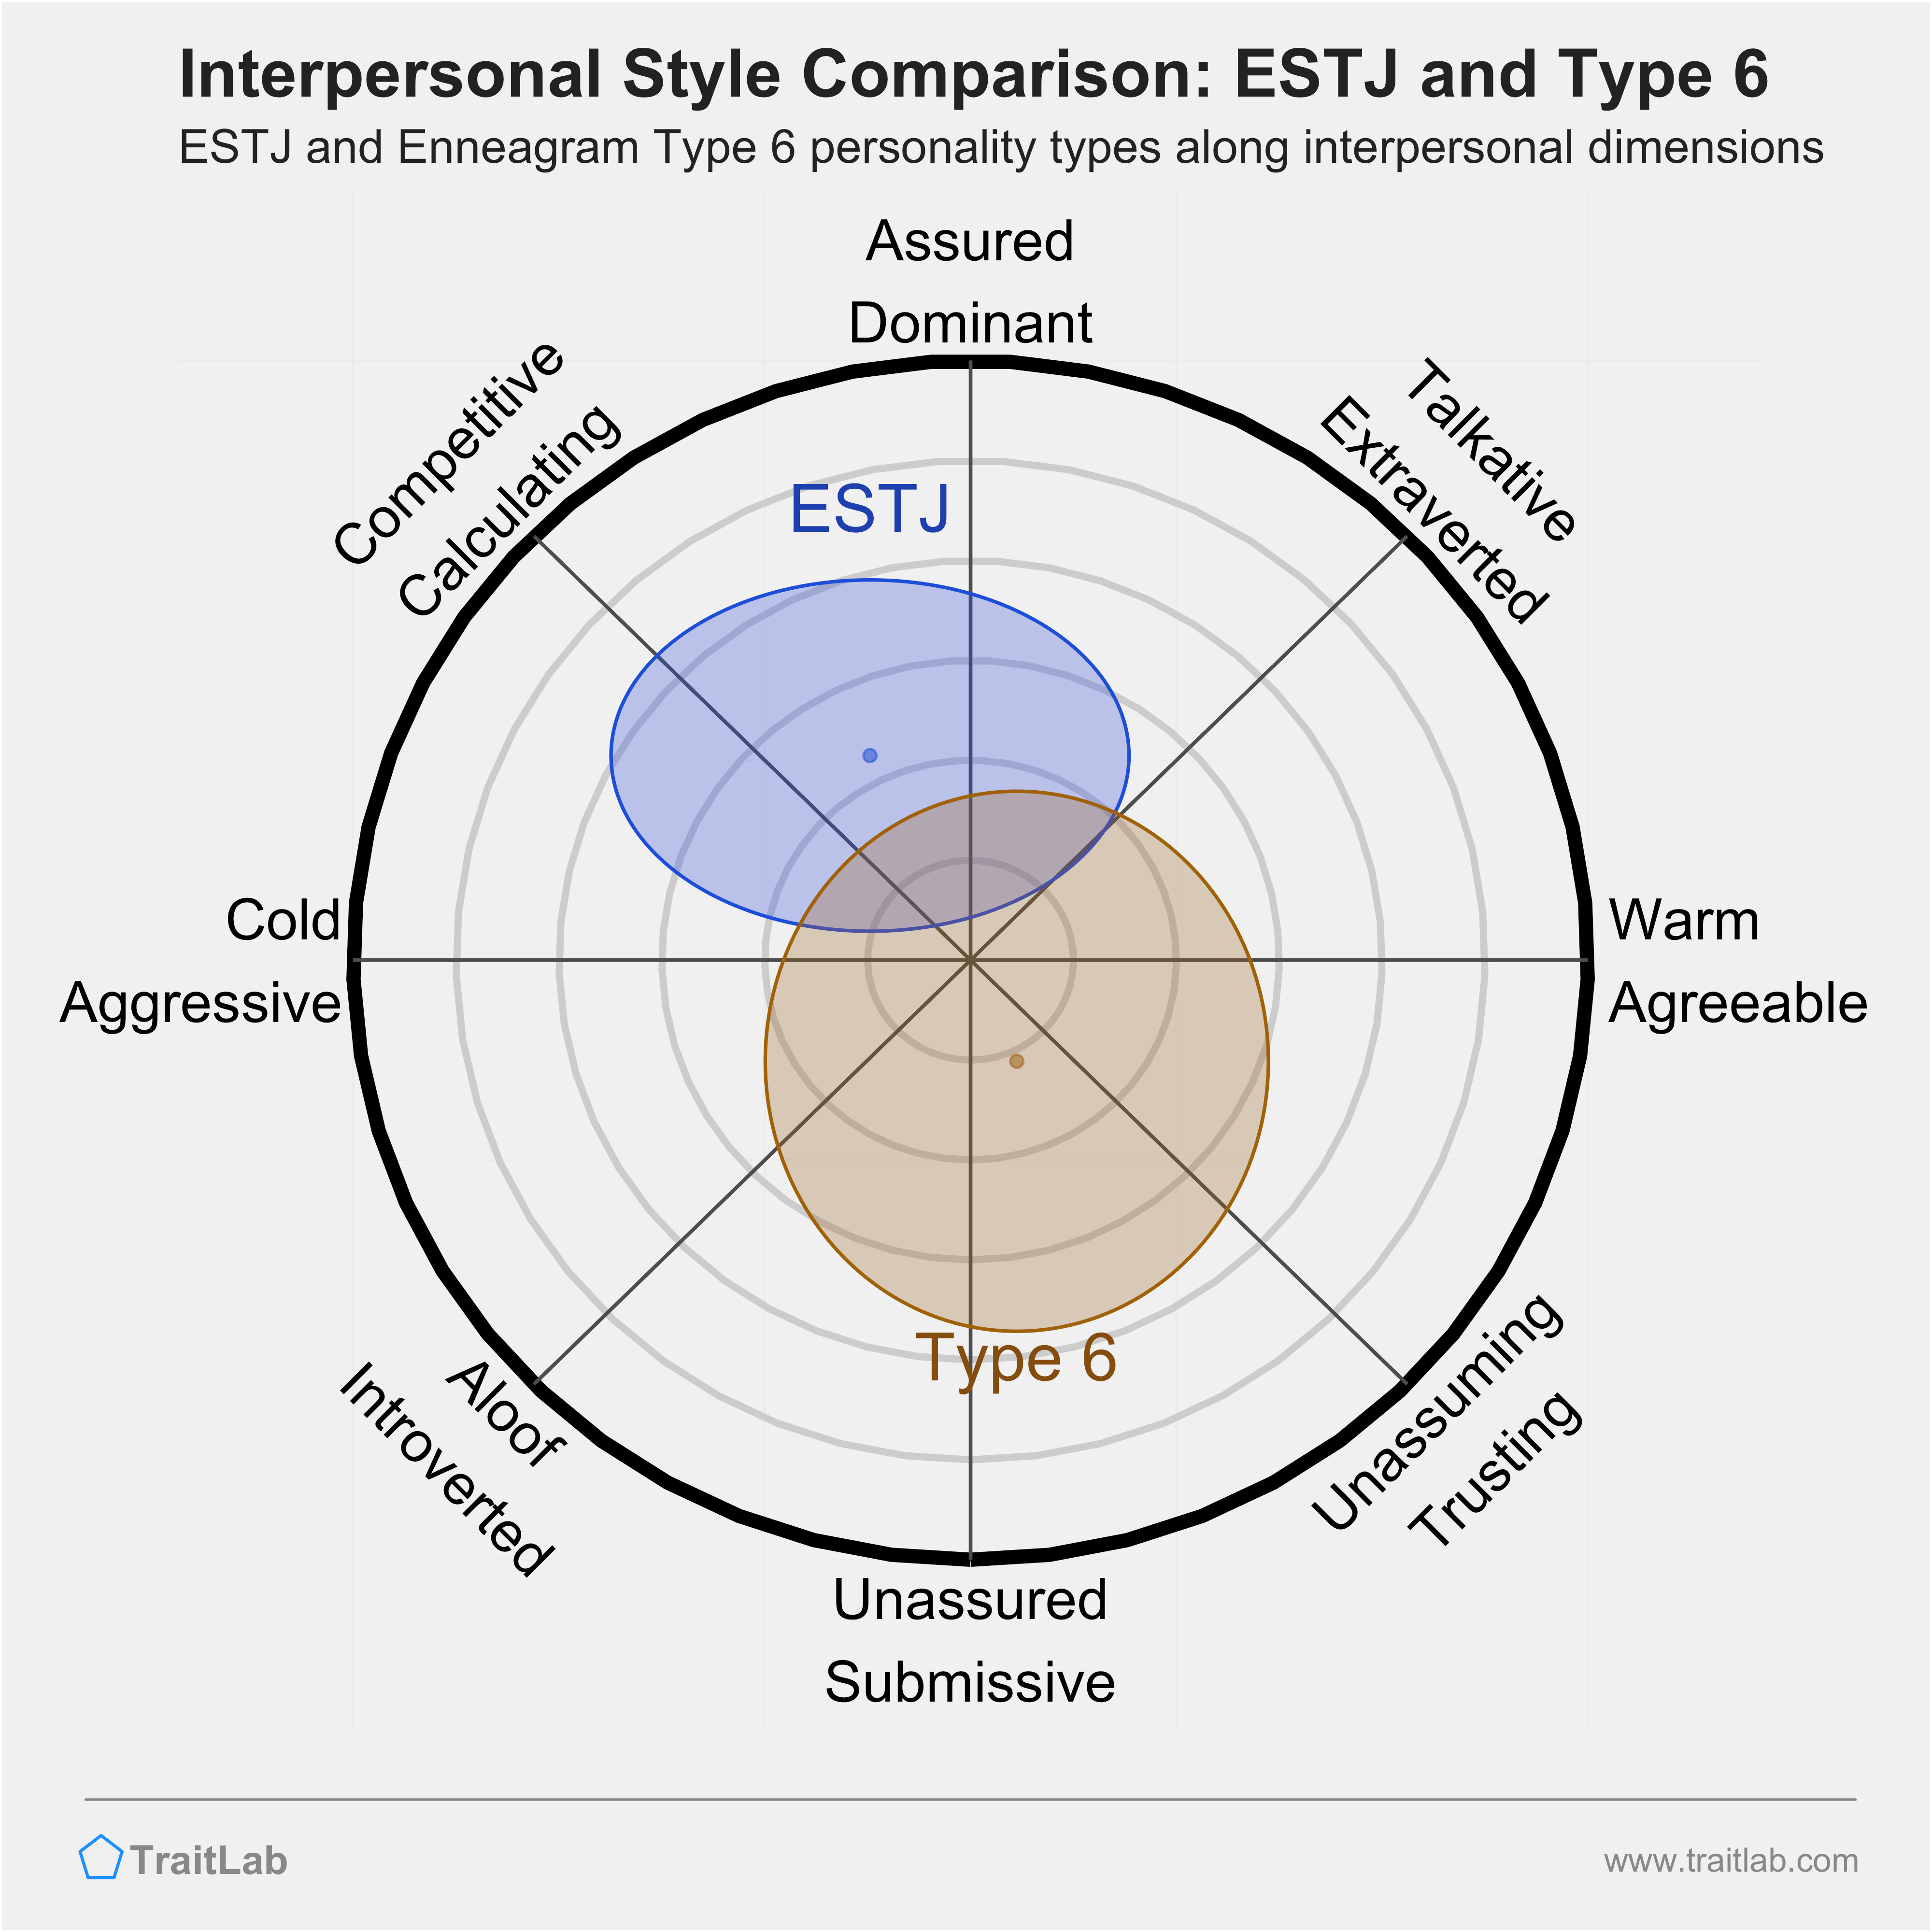 Enneagram ESTJ and Type 6 comparison across interpersonal dimensions